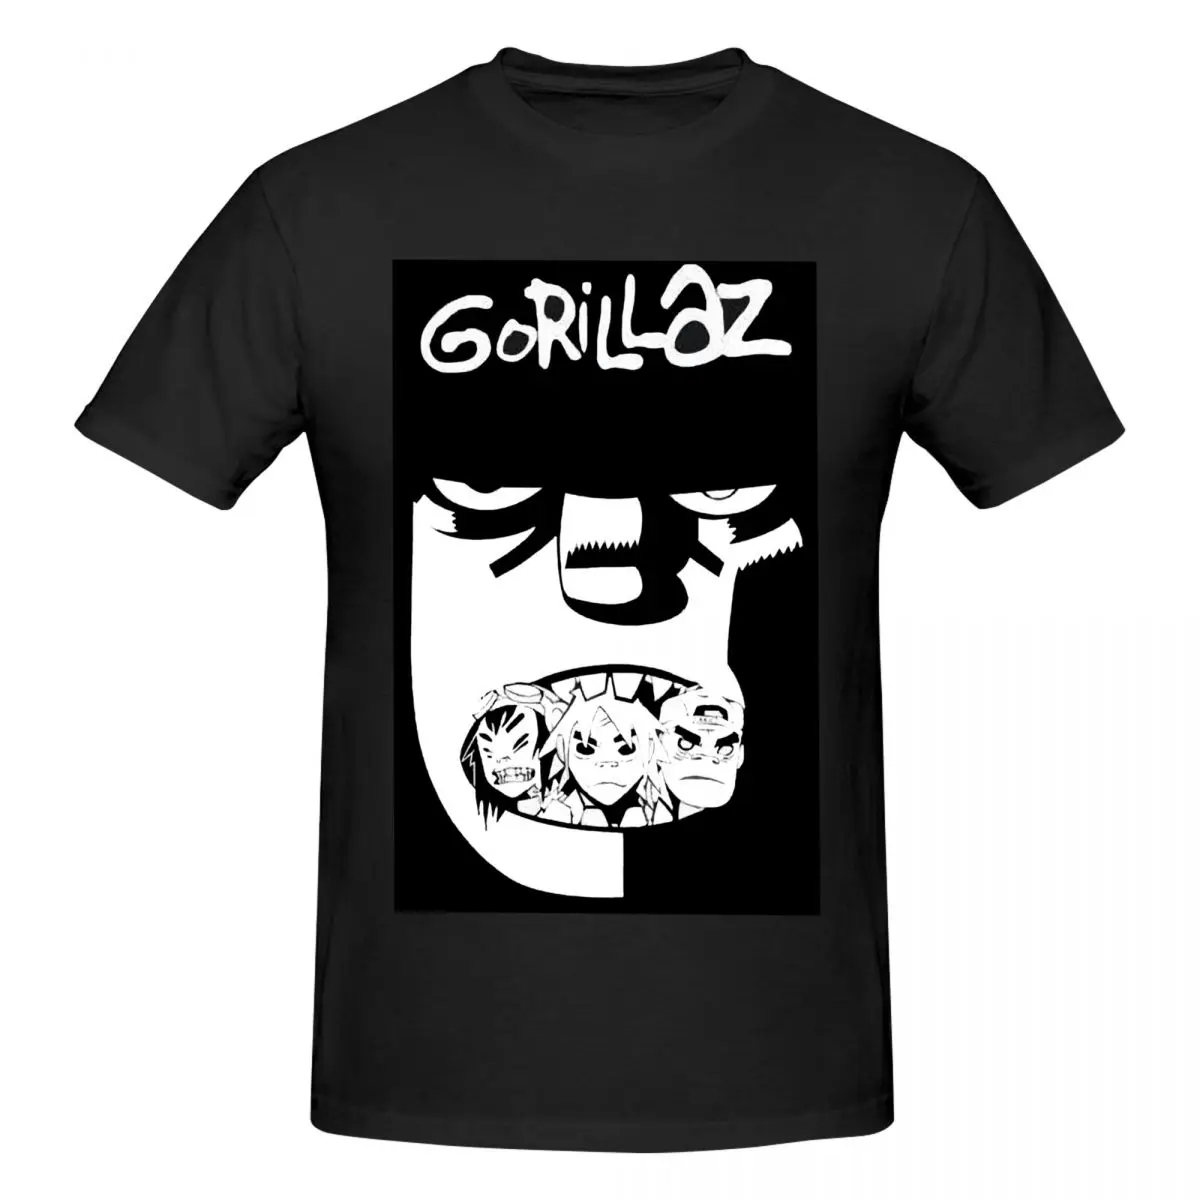 

Cool Music Band Gorillaz Skateboard 5 Men's tight fitting sports T-shirt,Gym Sportswear, Oversized print Tee shirt